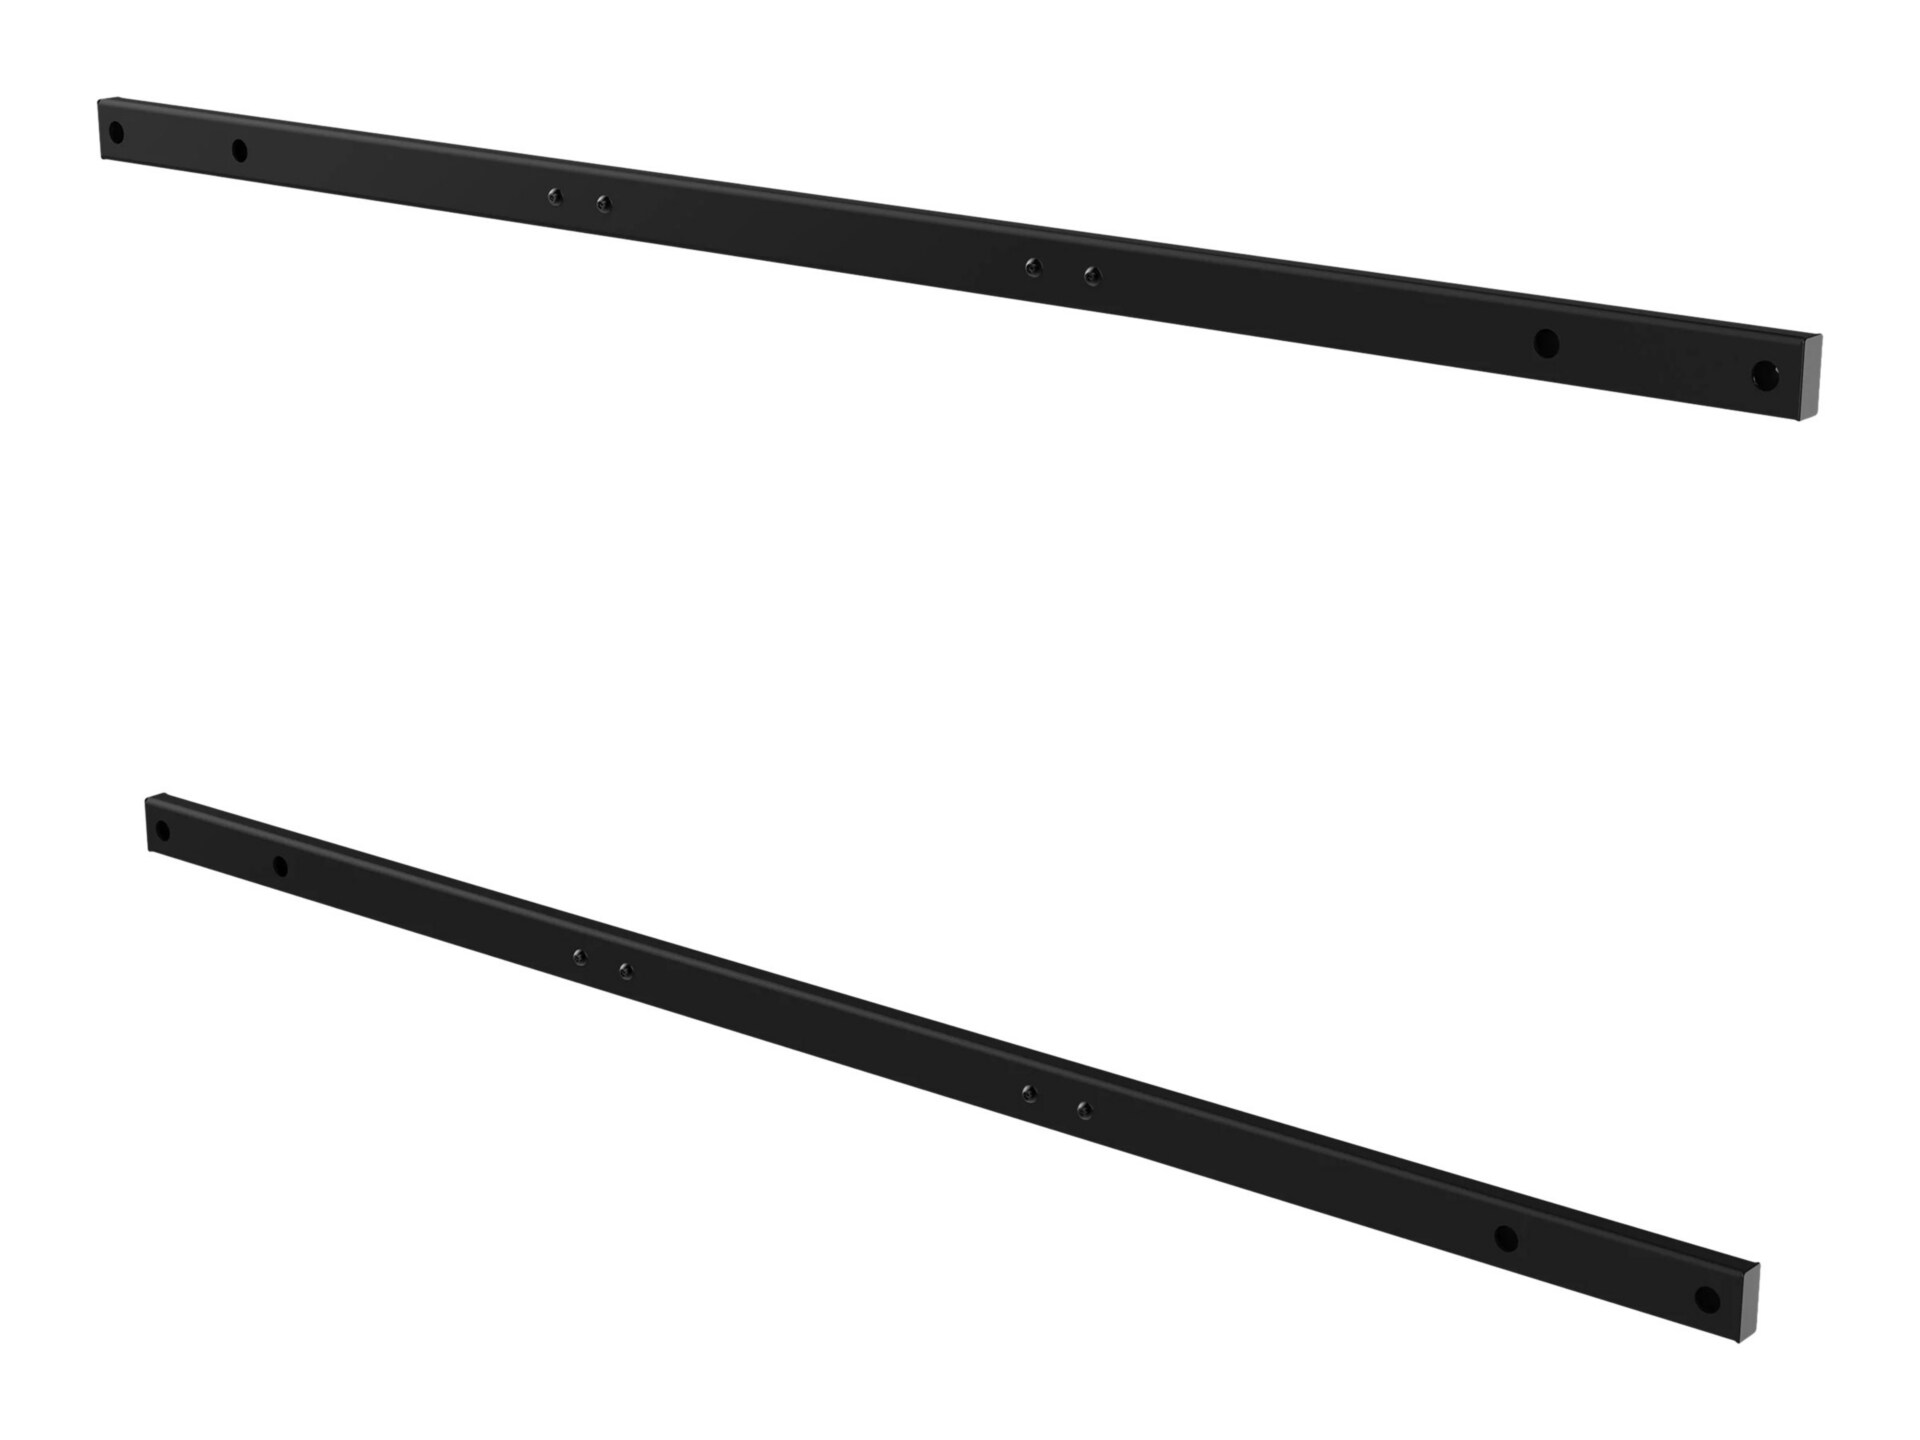 Peerless-AV Adapter Rail for VESA 1200mm Wide Mounting Pattern - Black